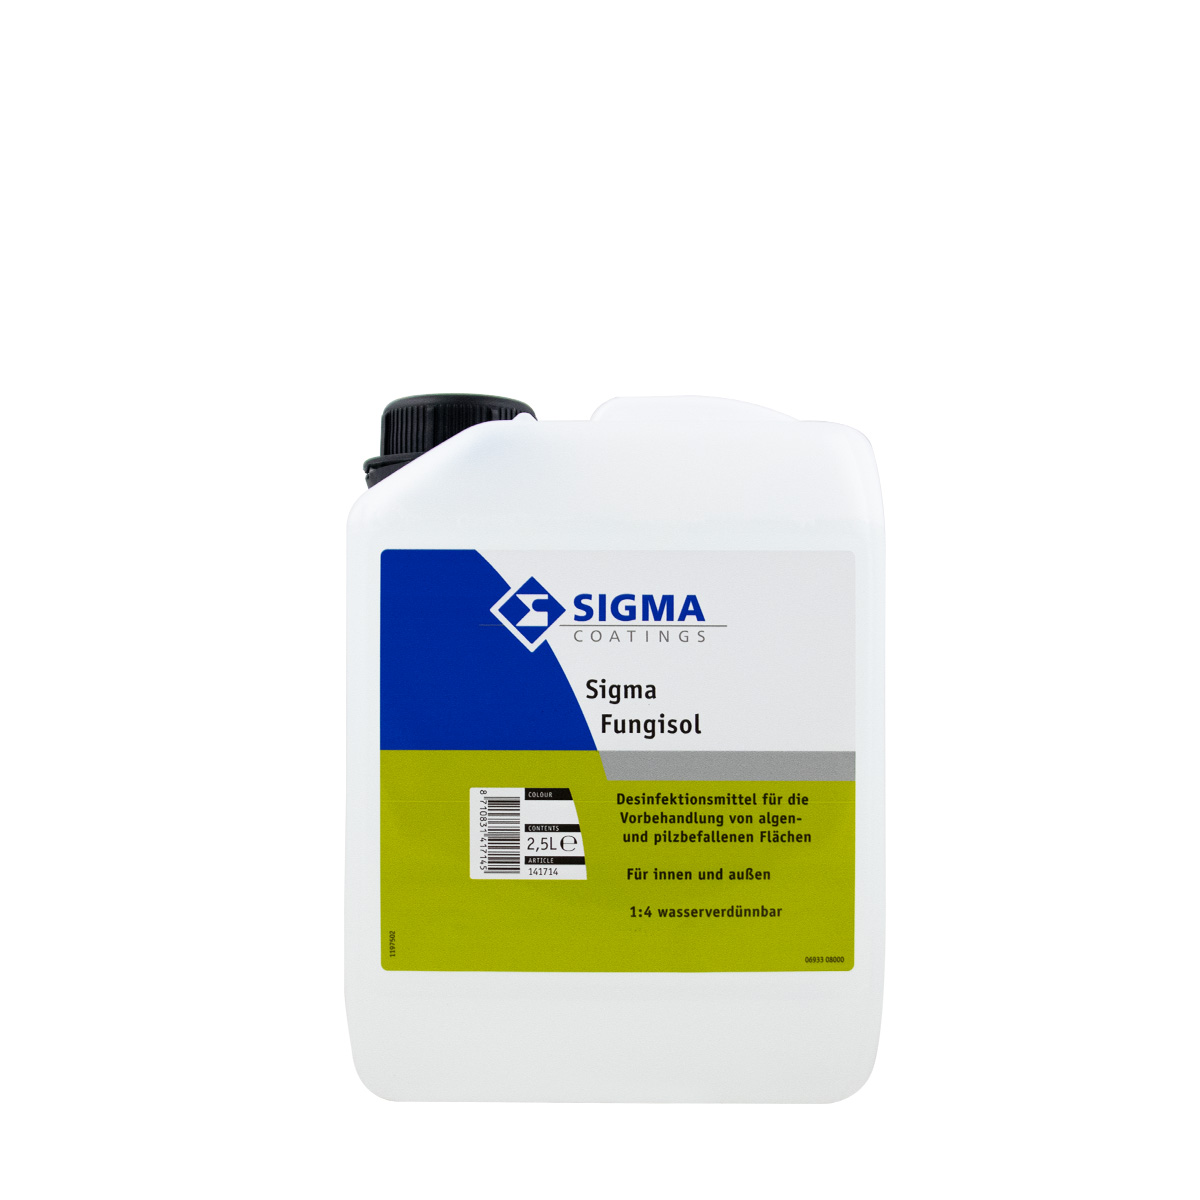 Sigma Fungisol 2,5L Reiniger, Desinfektionsmittel